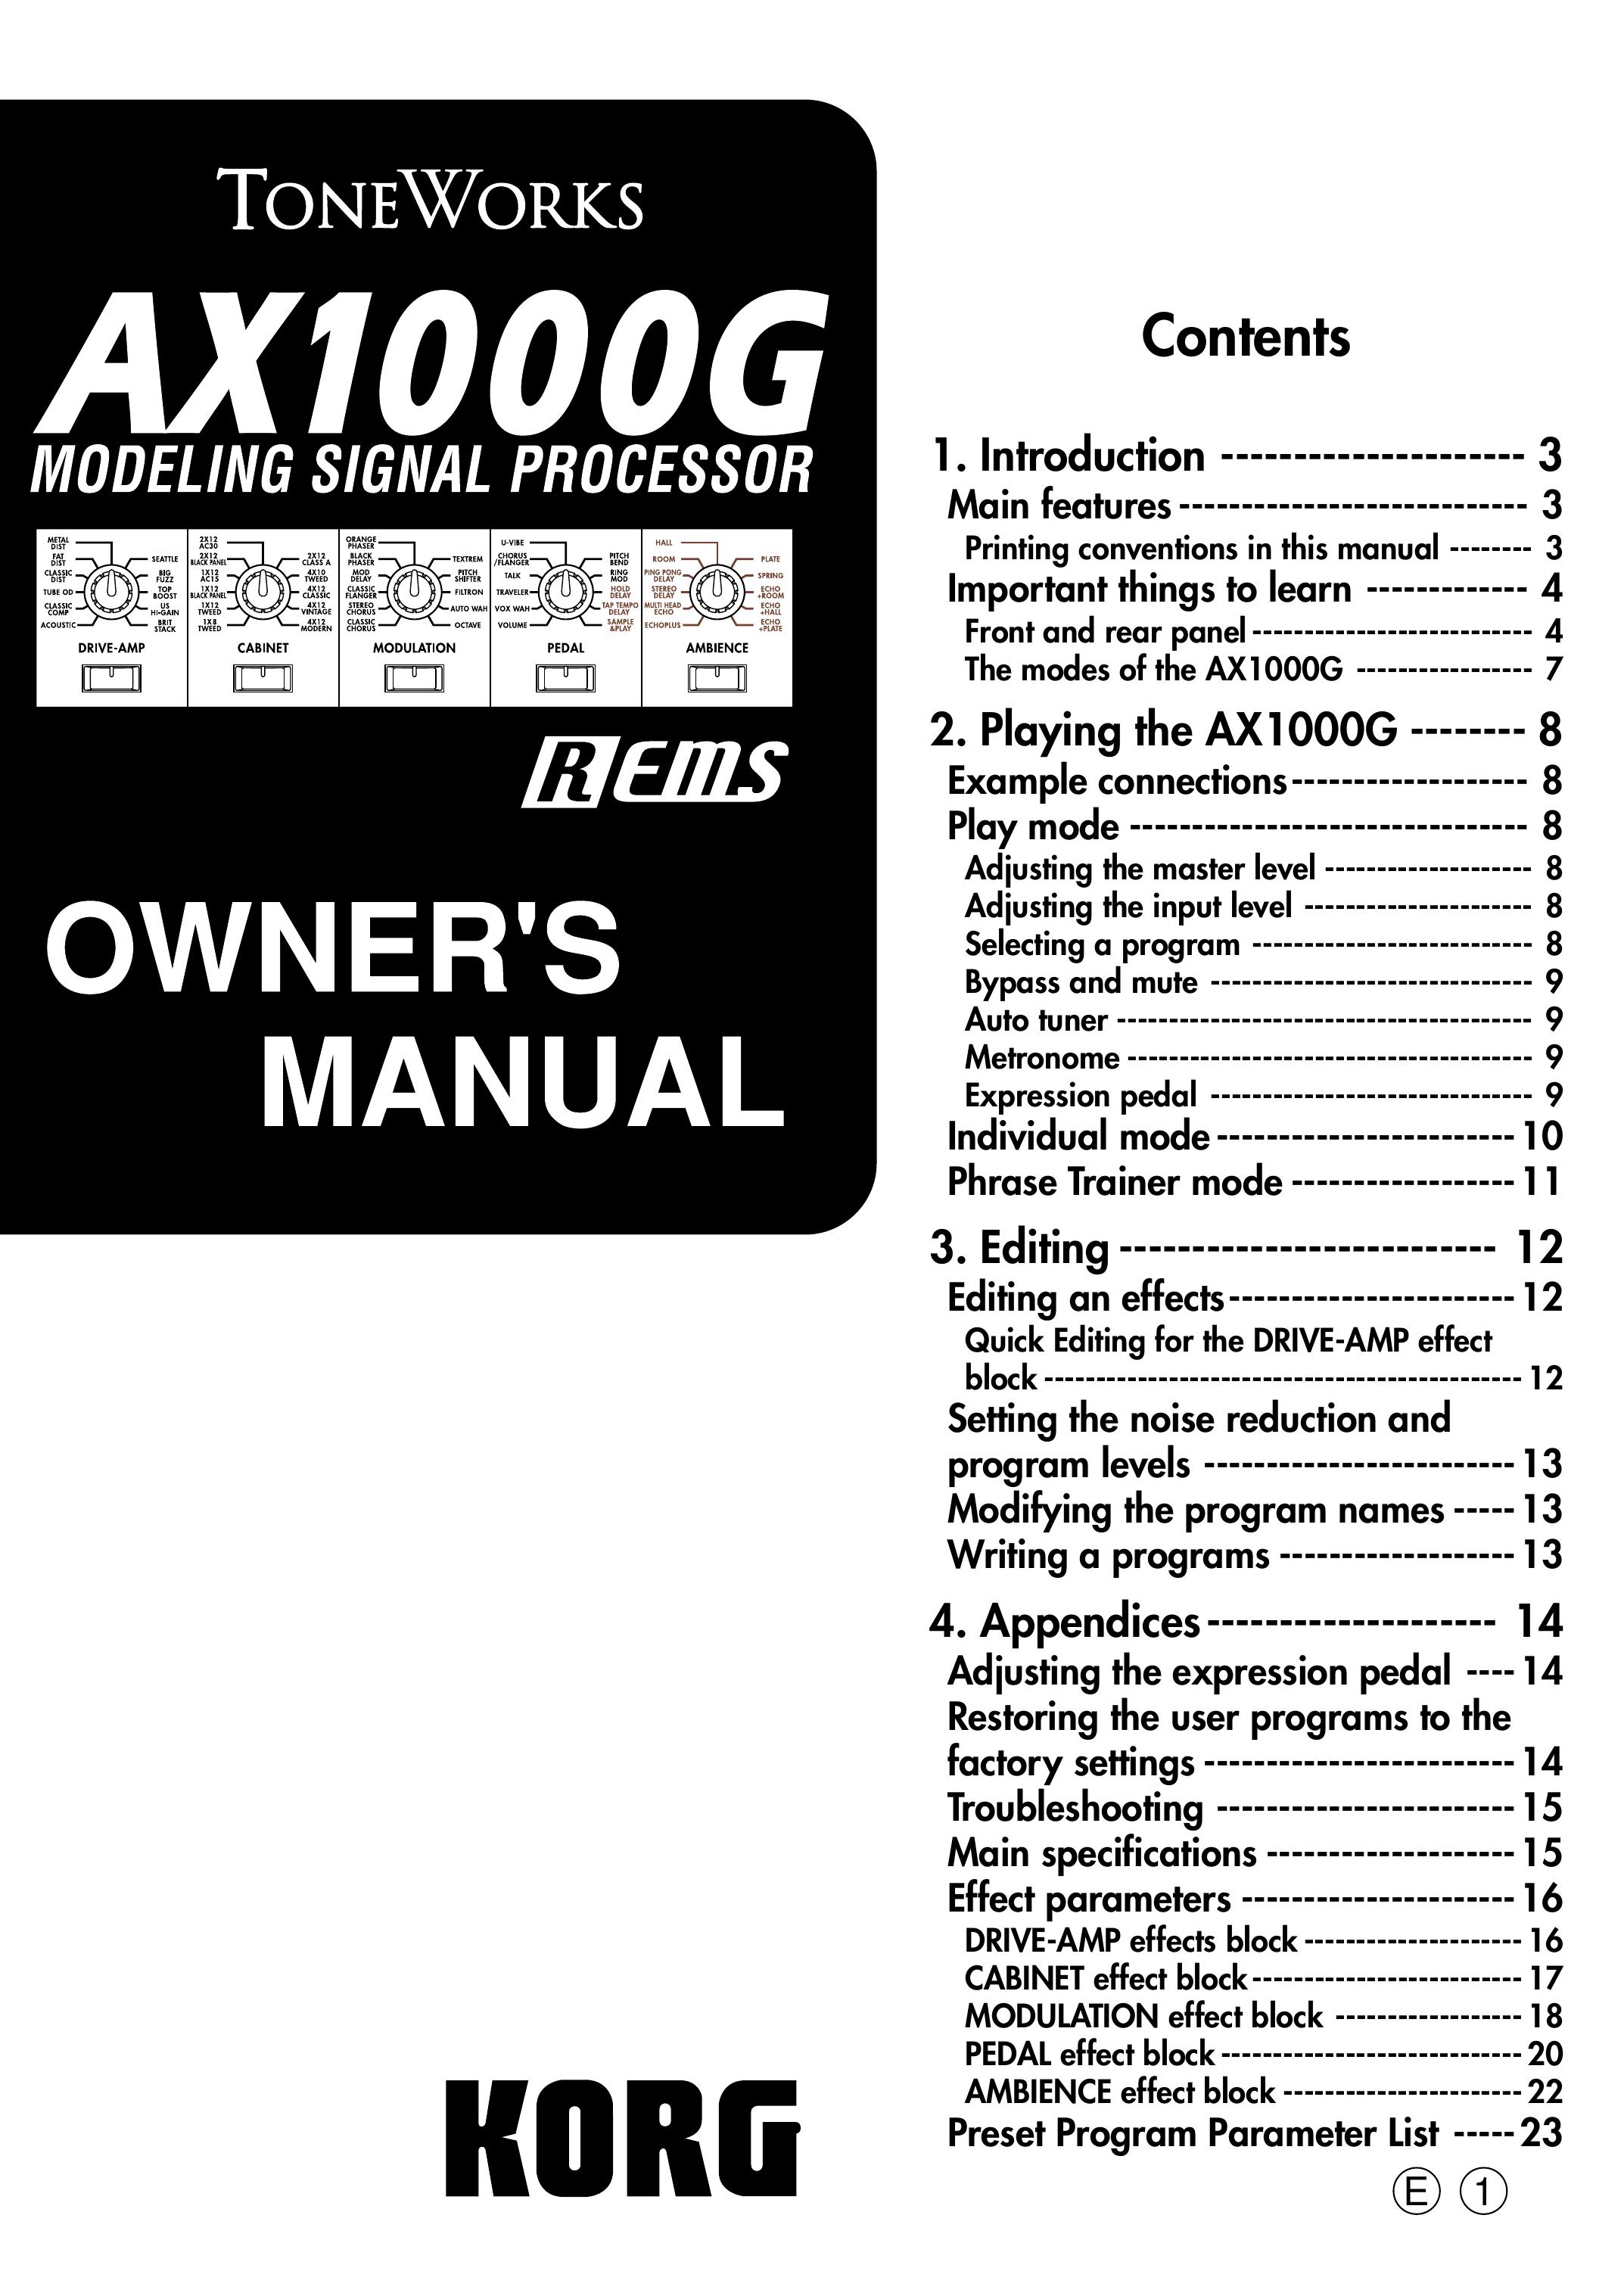 Korg AX1000G Musical Instrument User Manual